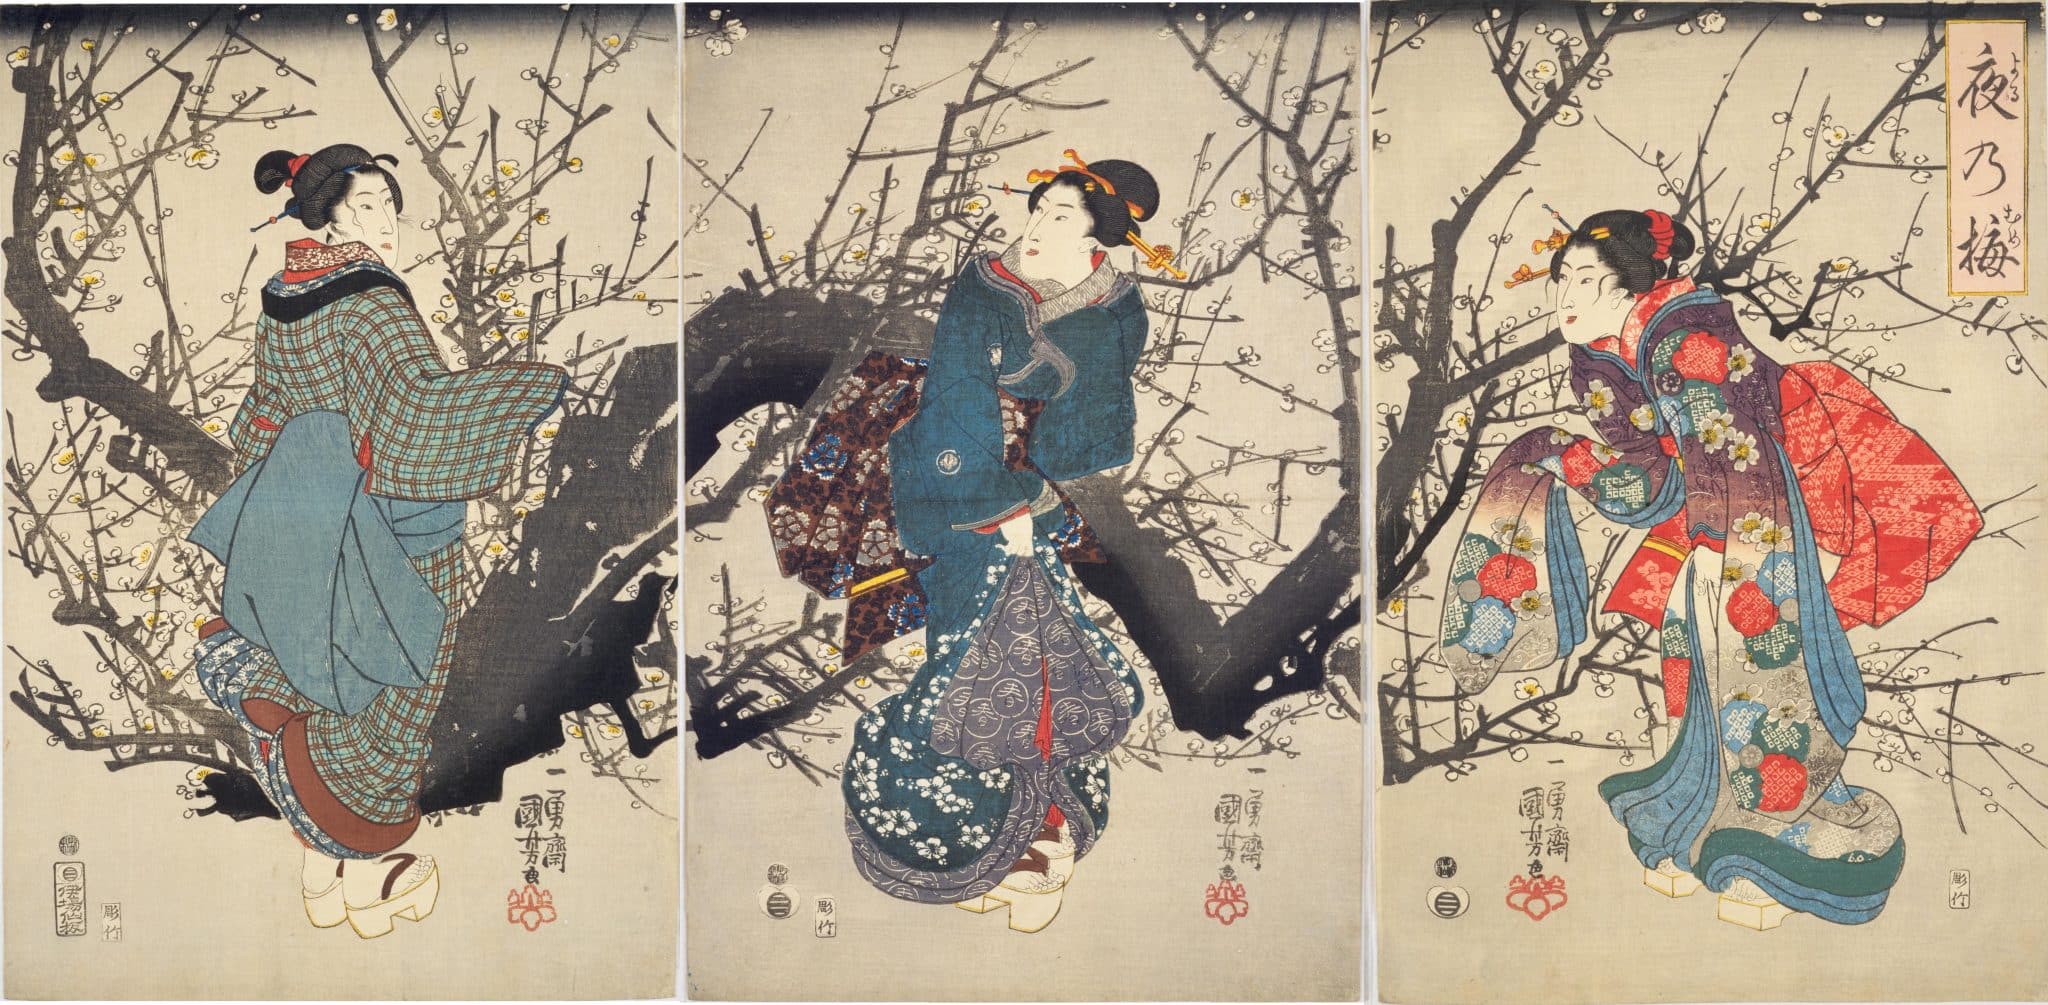 Utagawa Kuniyoshi, Plum Blossoms at Night (woodblock print) - public domain, found at Wikipedia